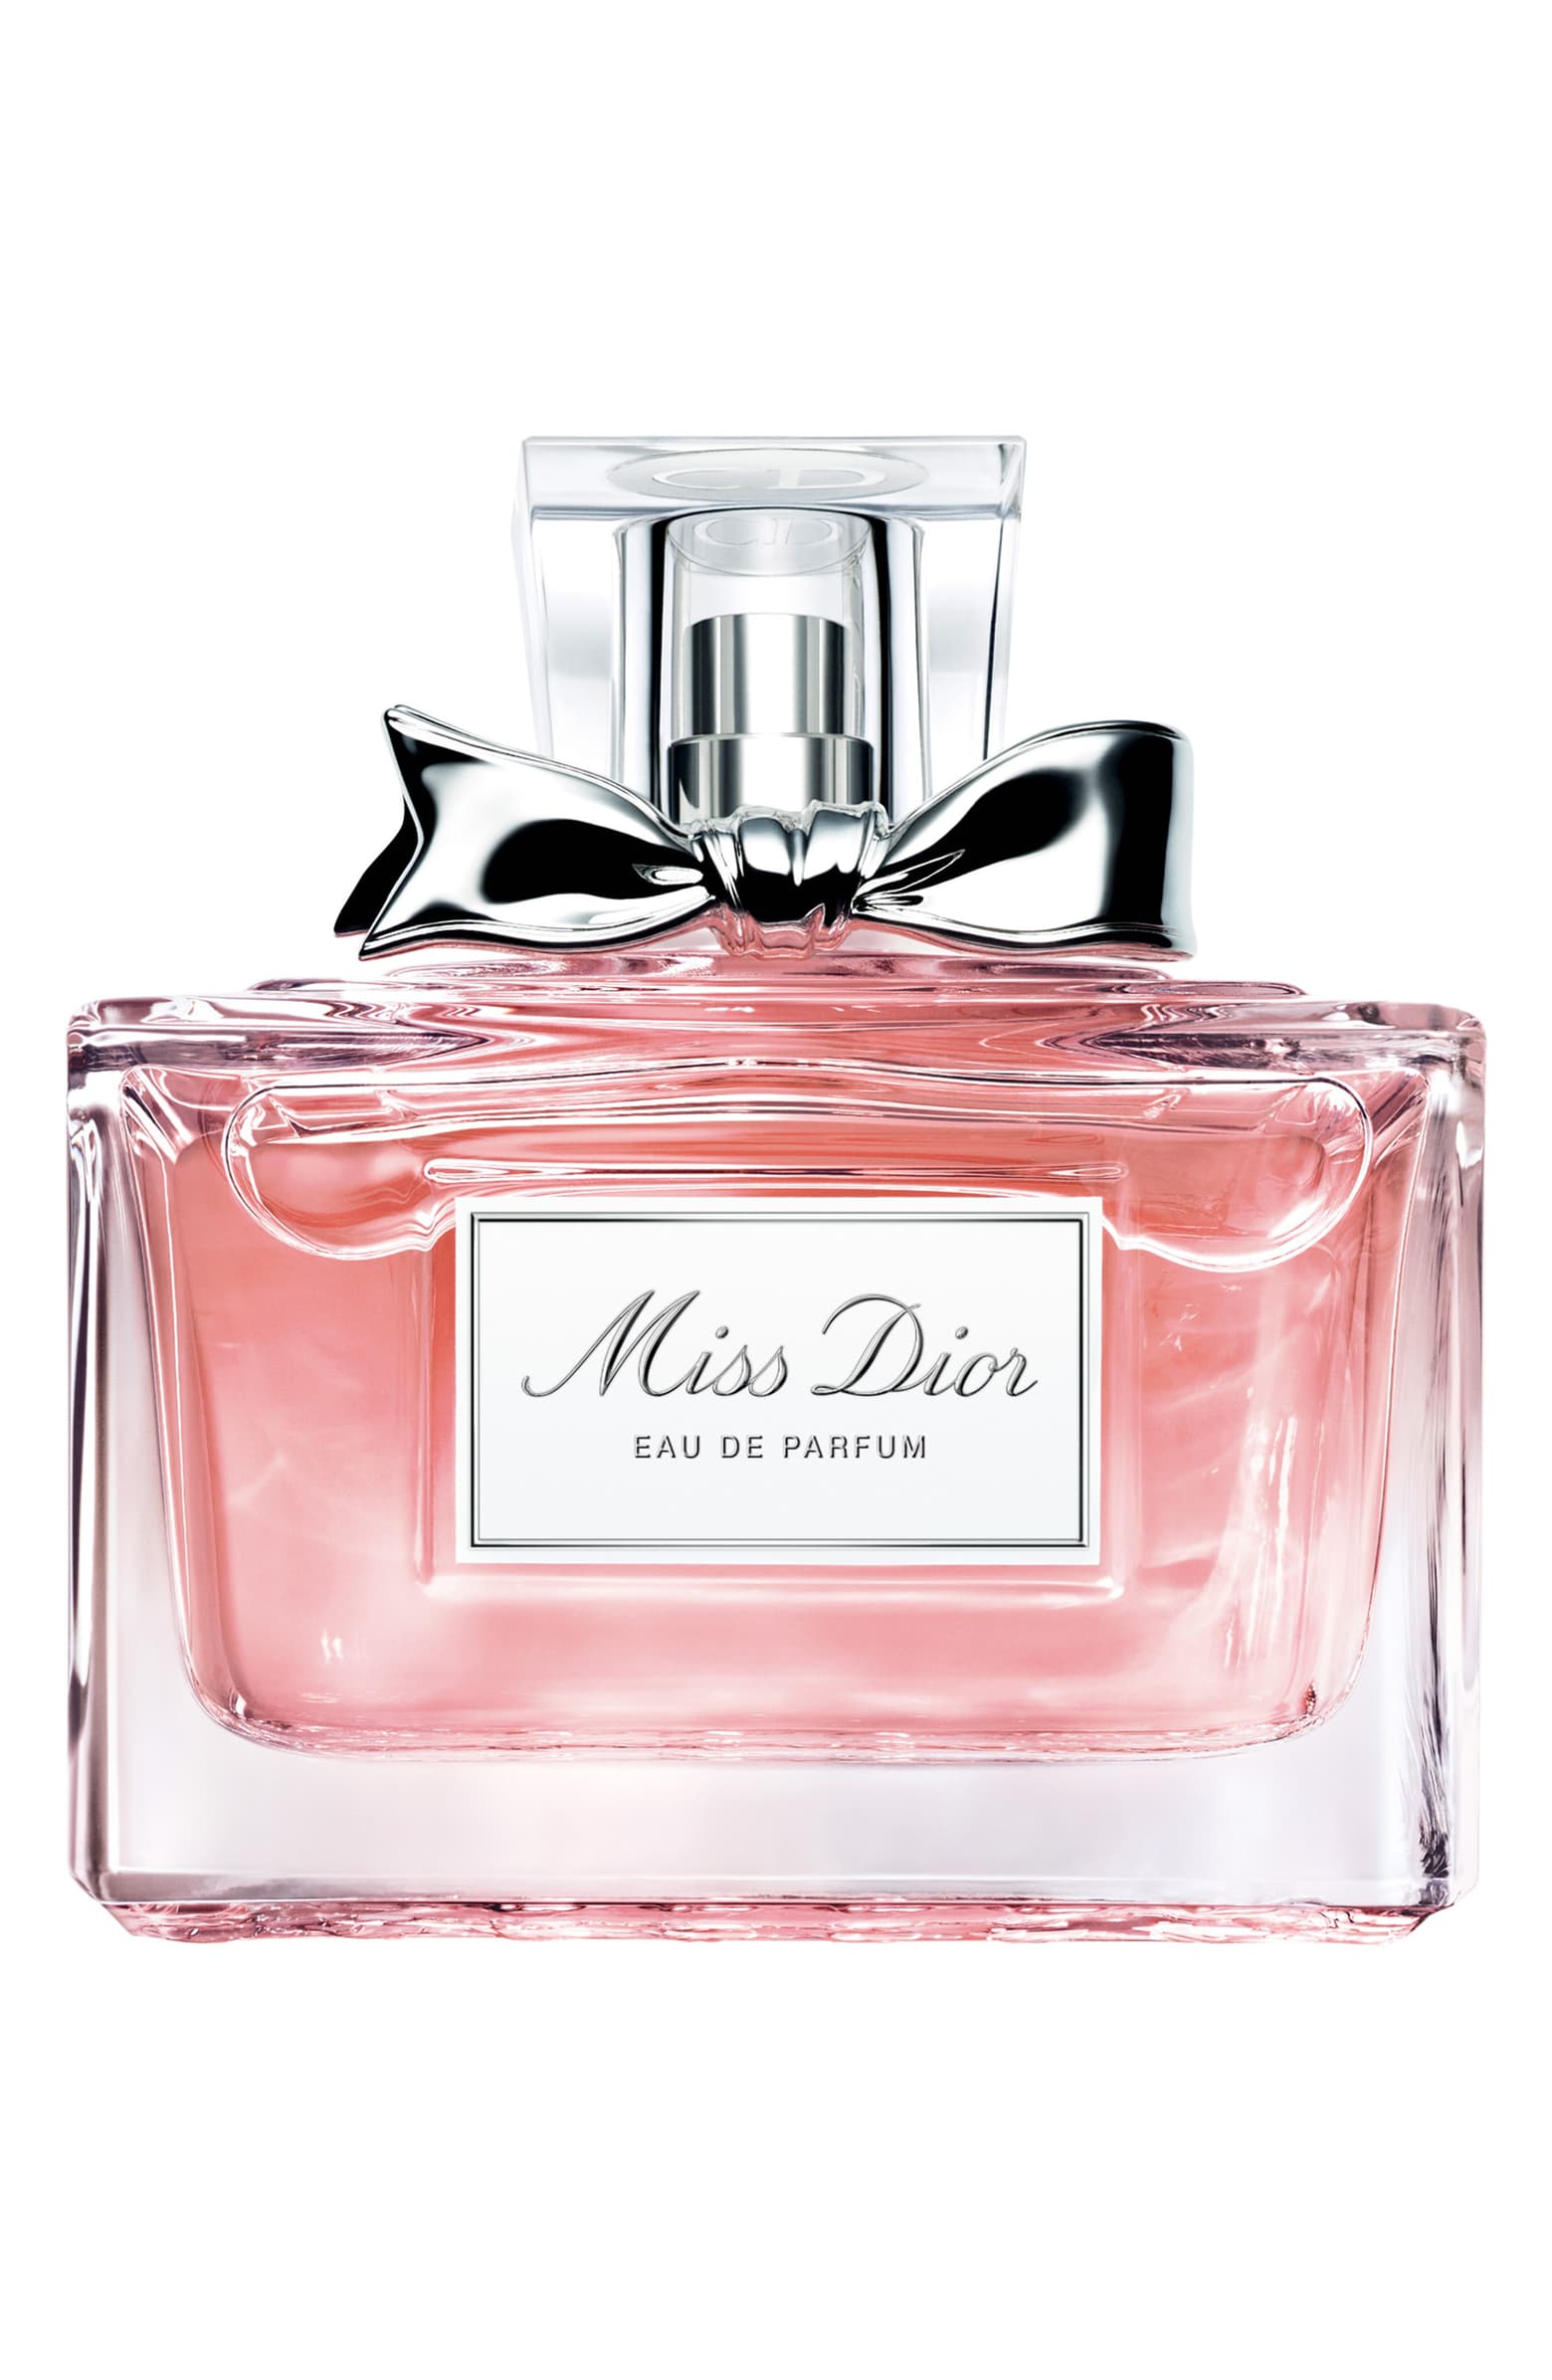 Miss Dior Eu de Parfum